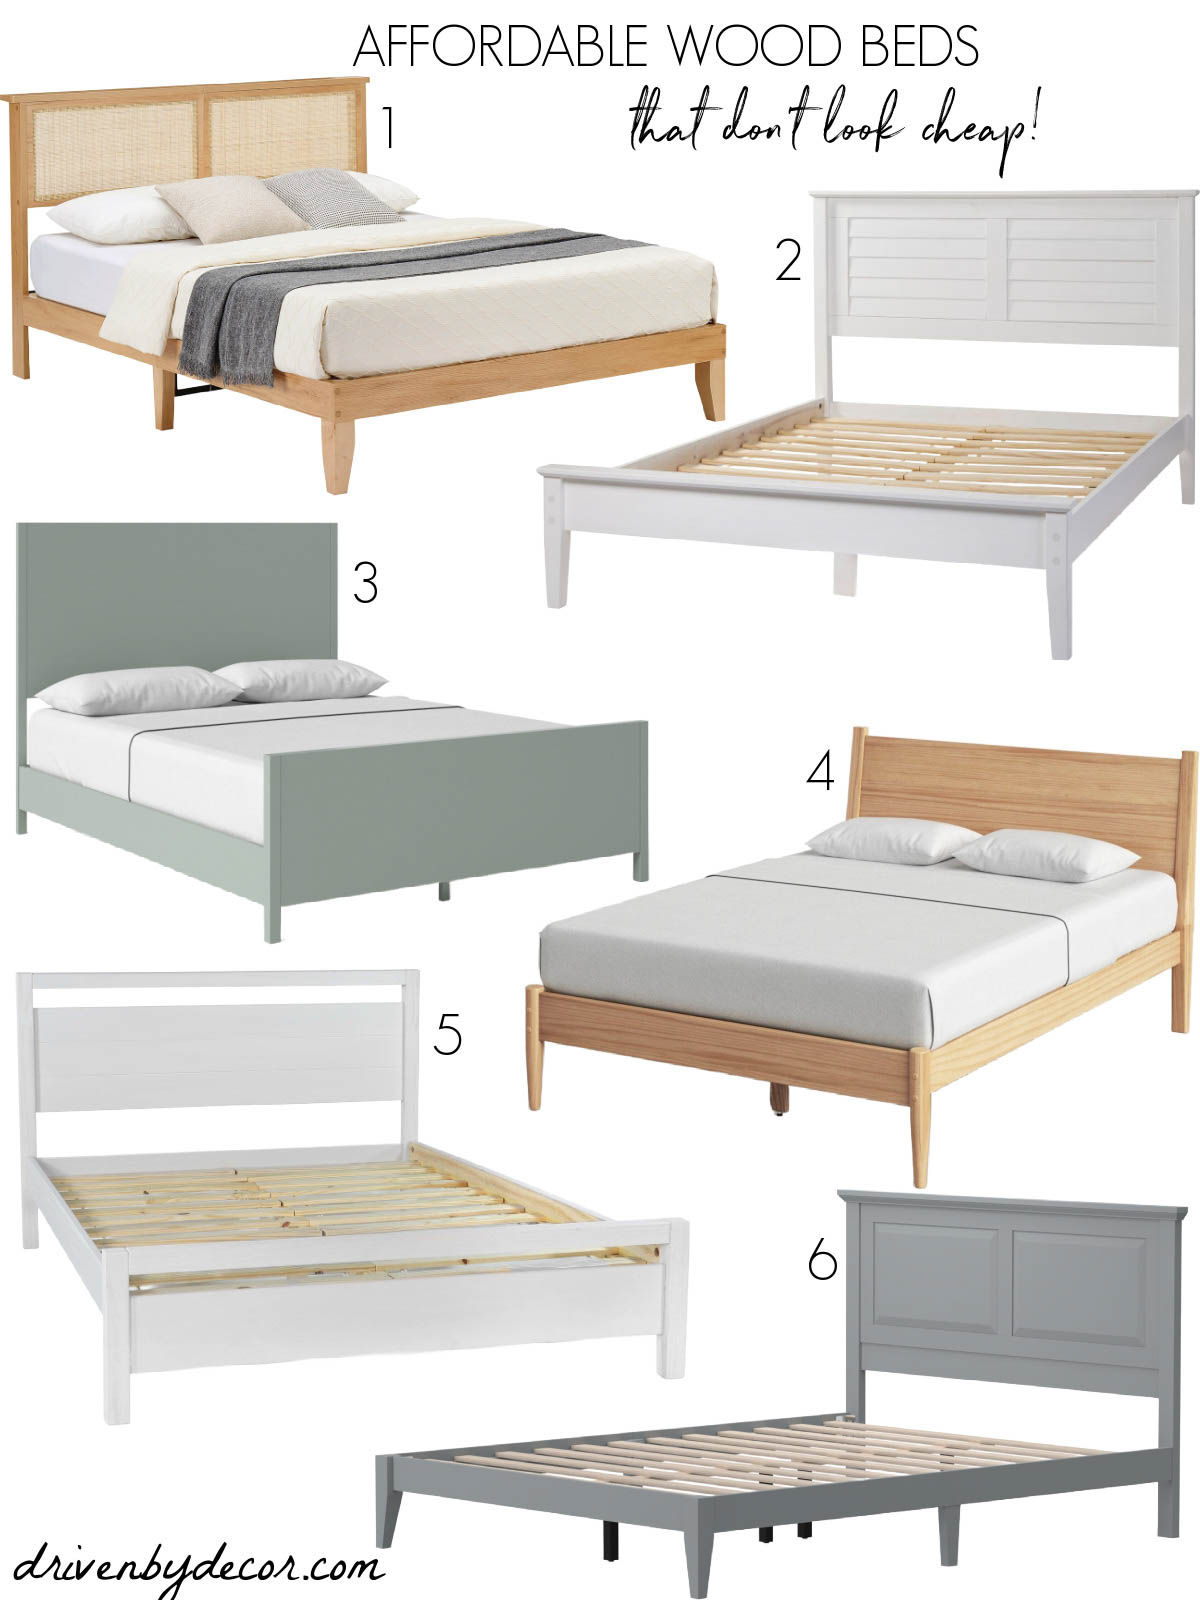 Six affordable beds - wood options